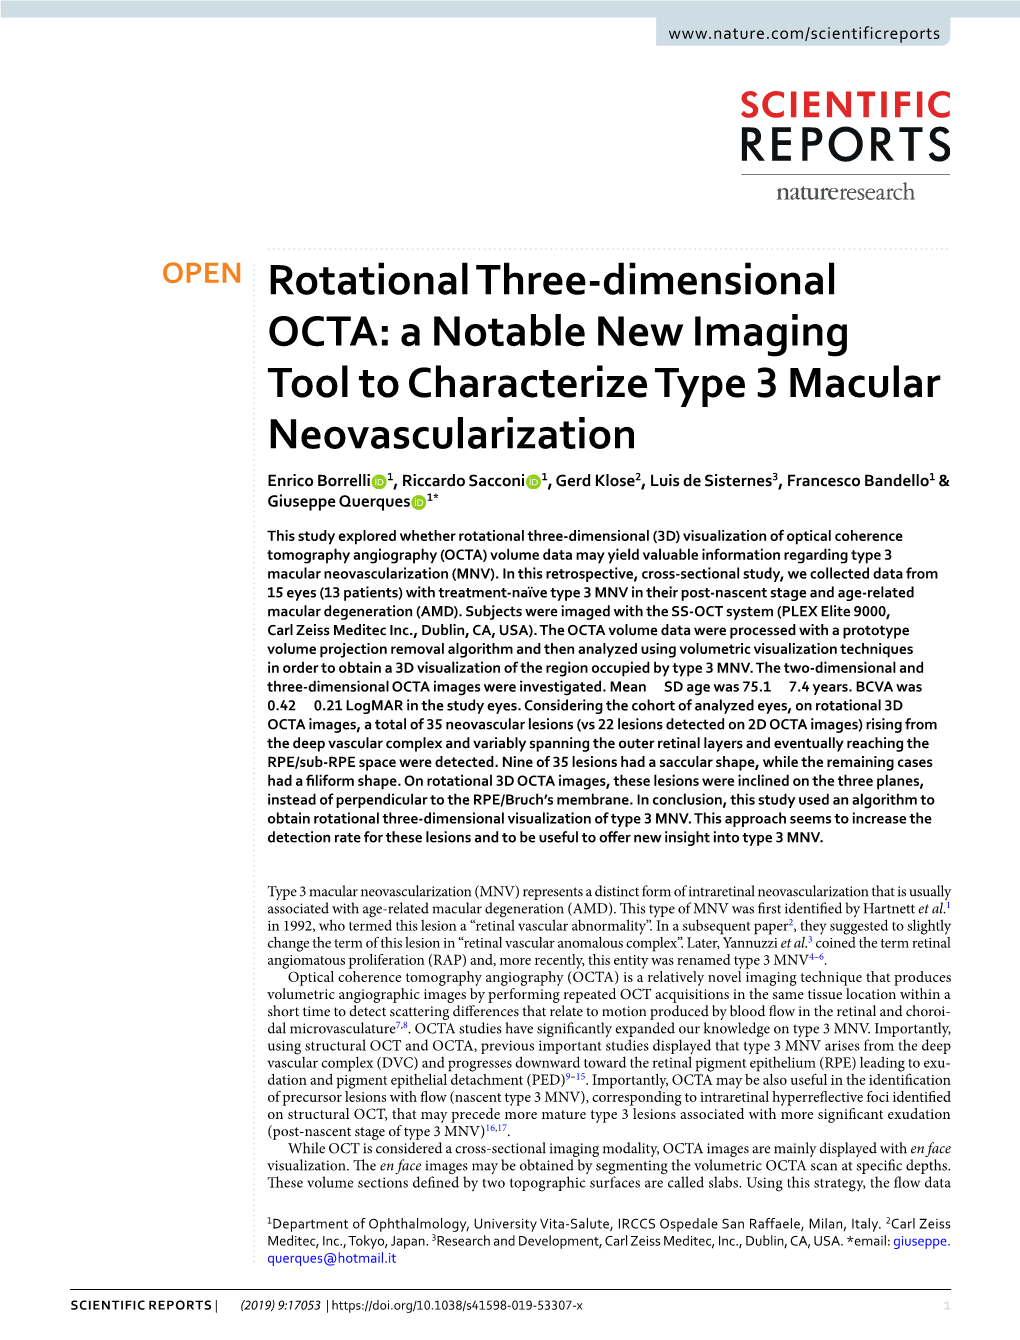 Rotational Three-Dimensional OCTA